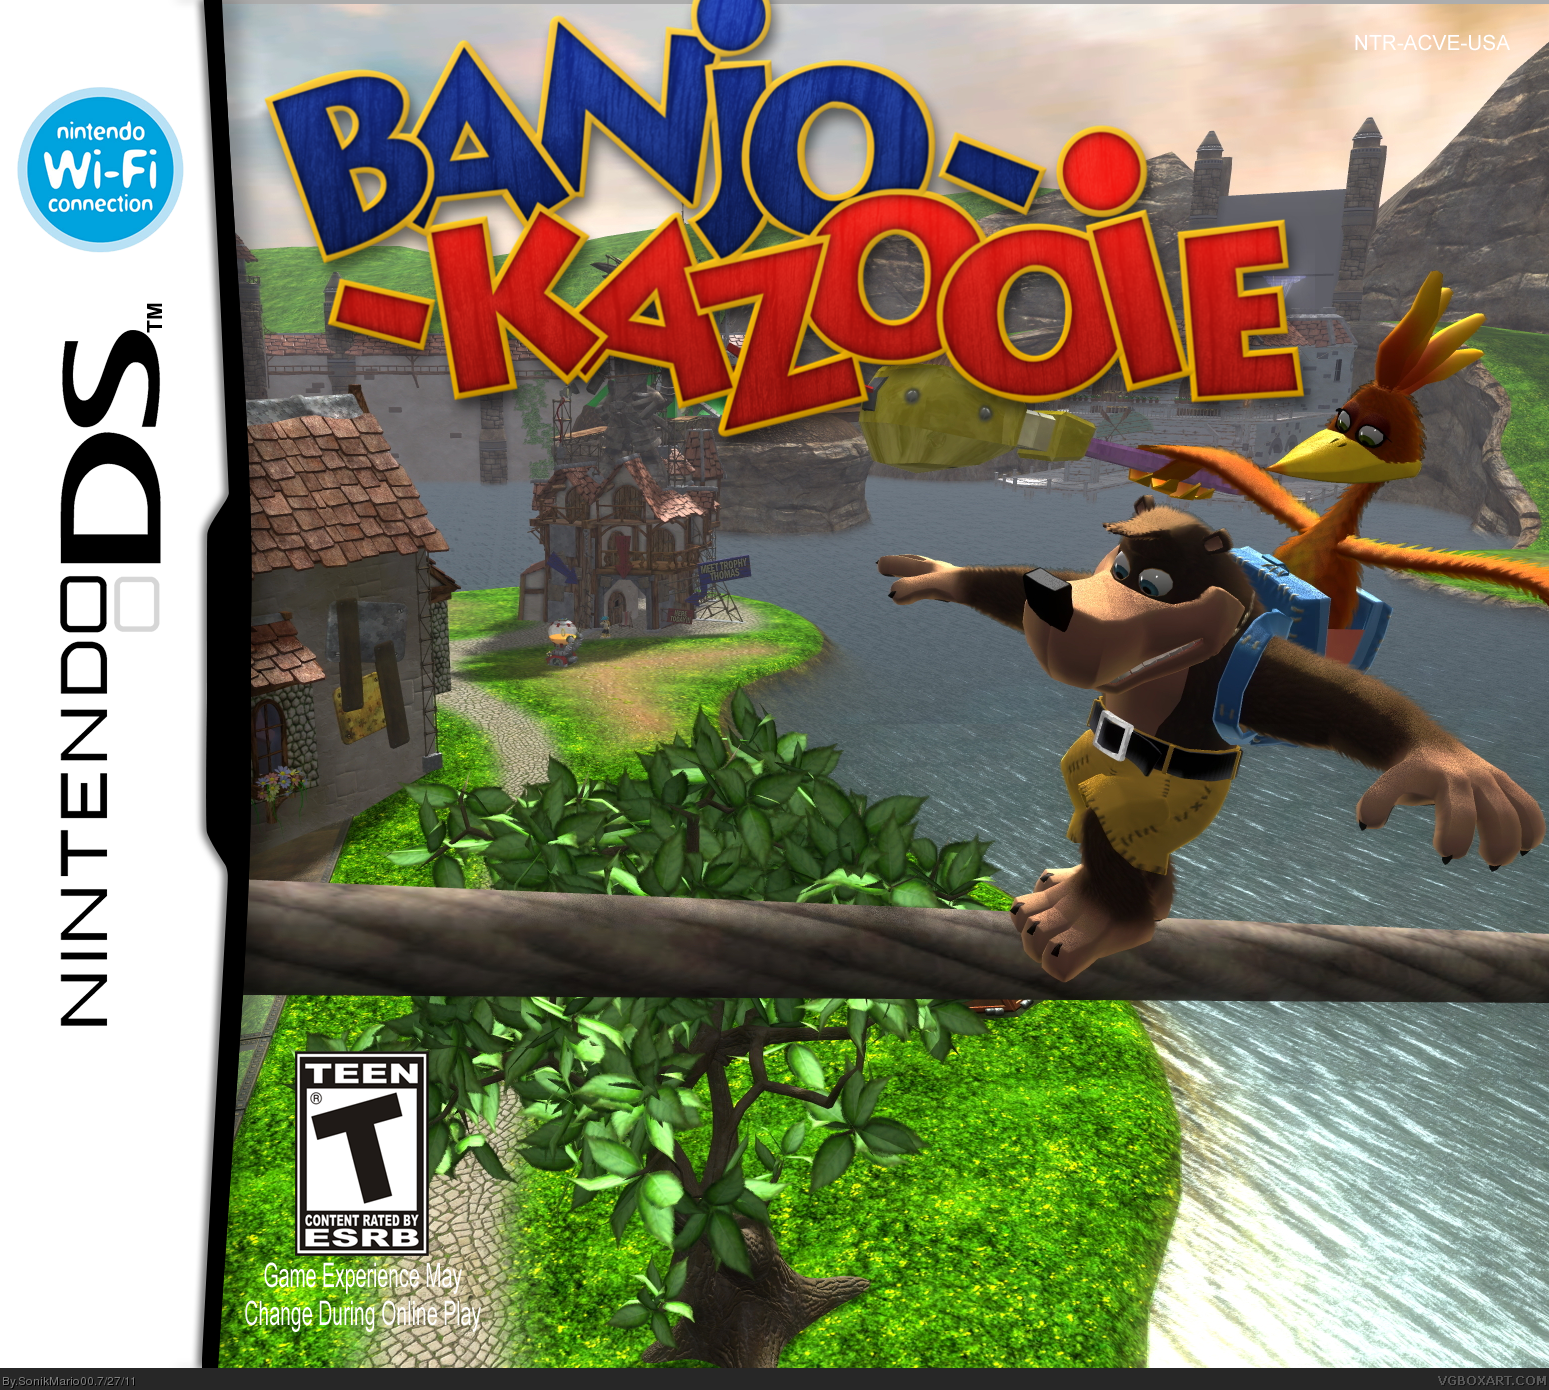 Banjo-Kazooie DS box cover